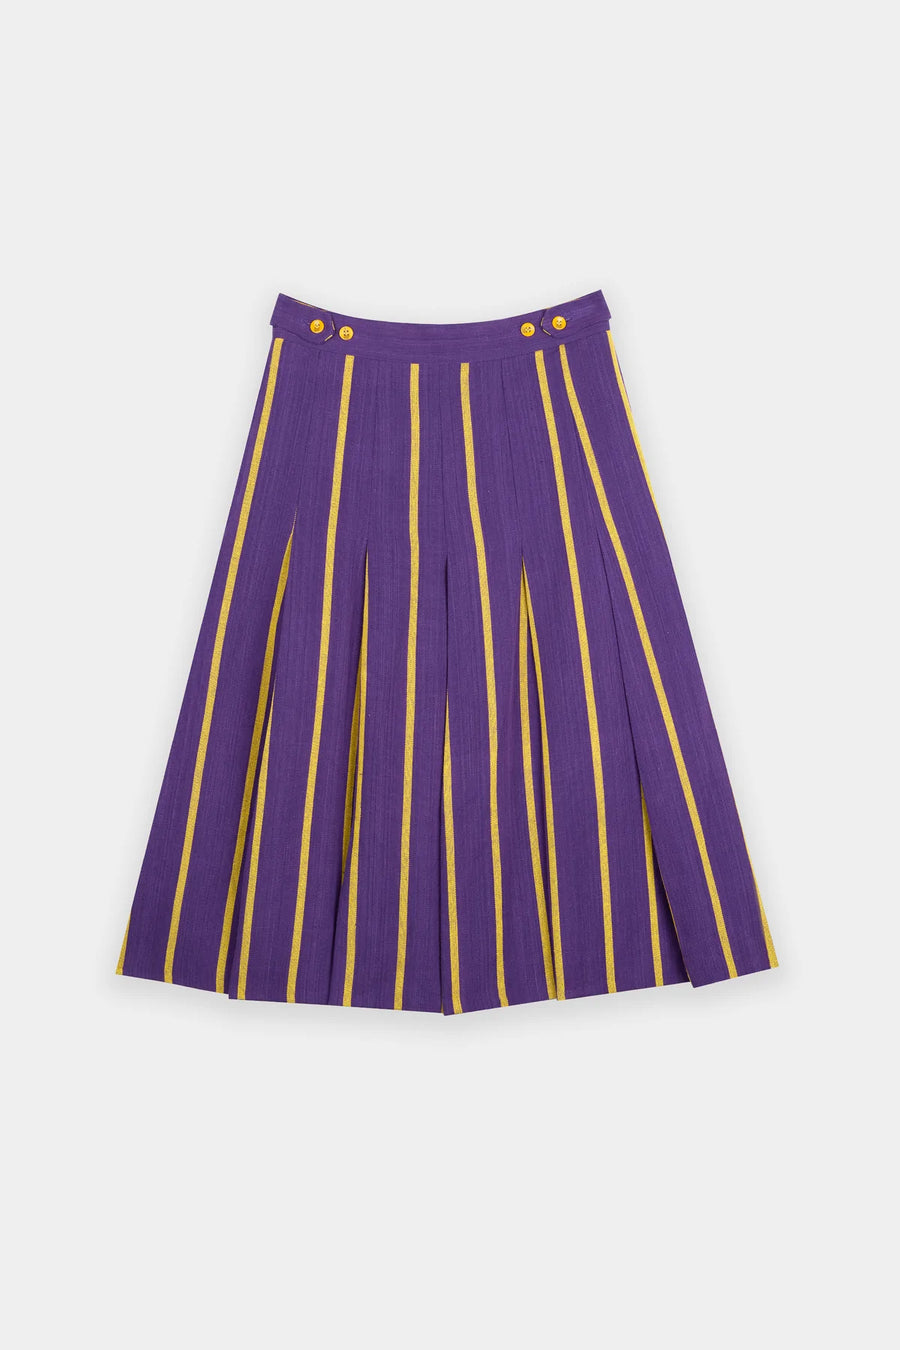 Izzy III High Waist Unisex Skirt - Purple/Yellow